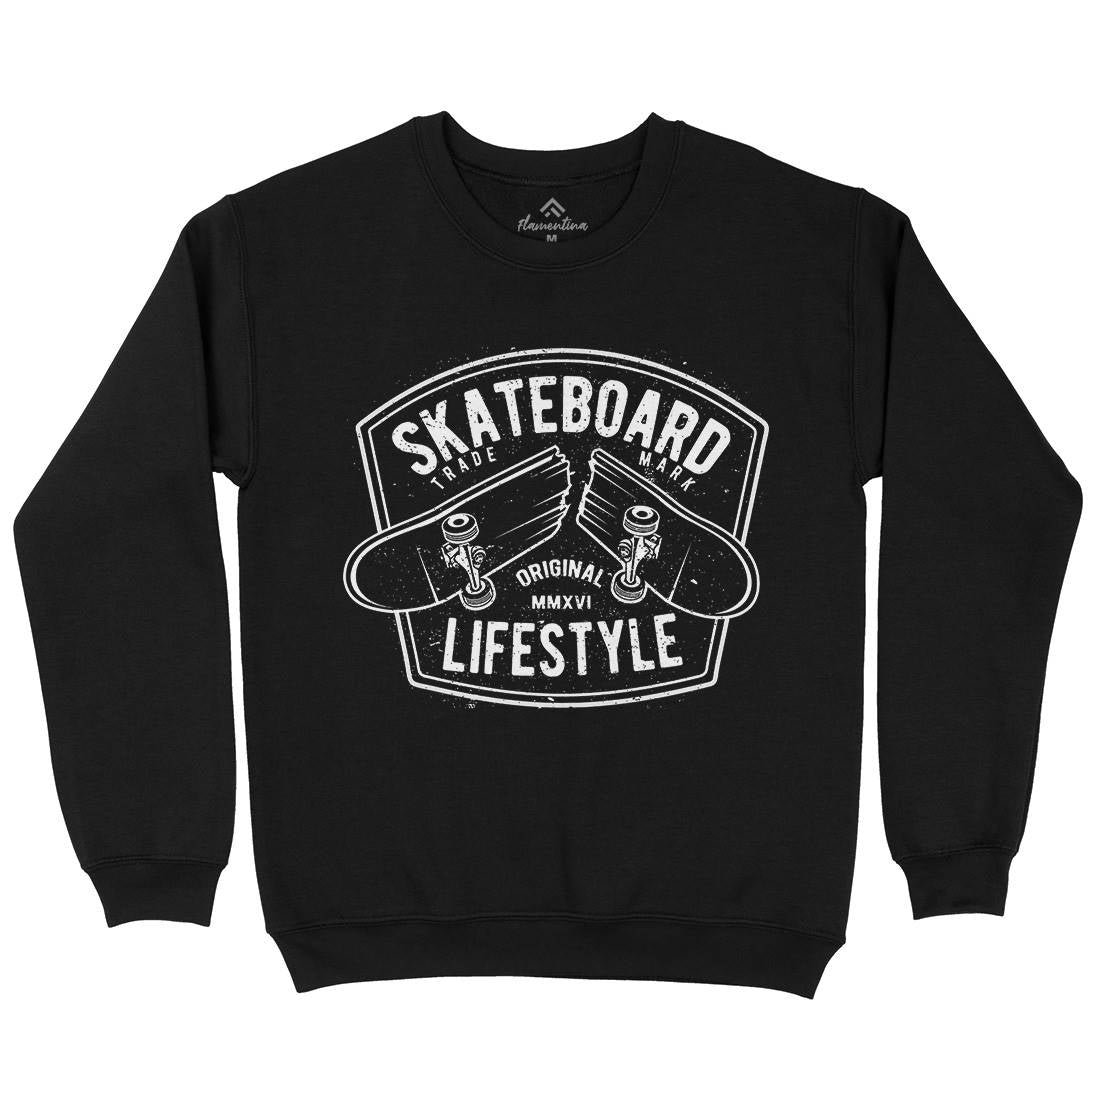 Skateboard Lifestyle Kids Crew Neck Sweatshirt Skate A145